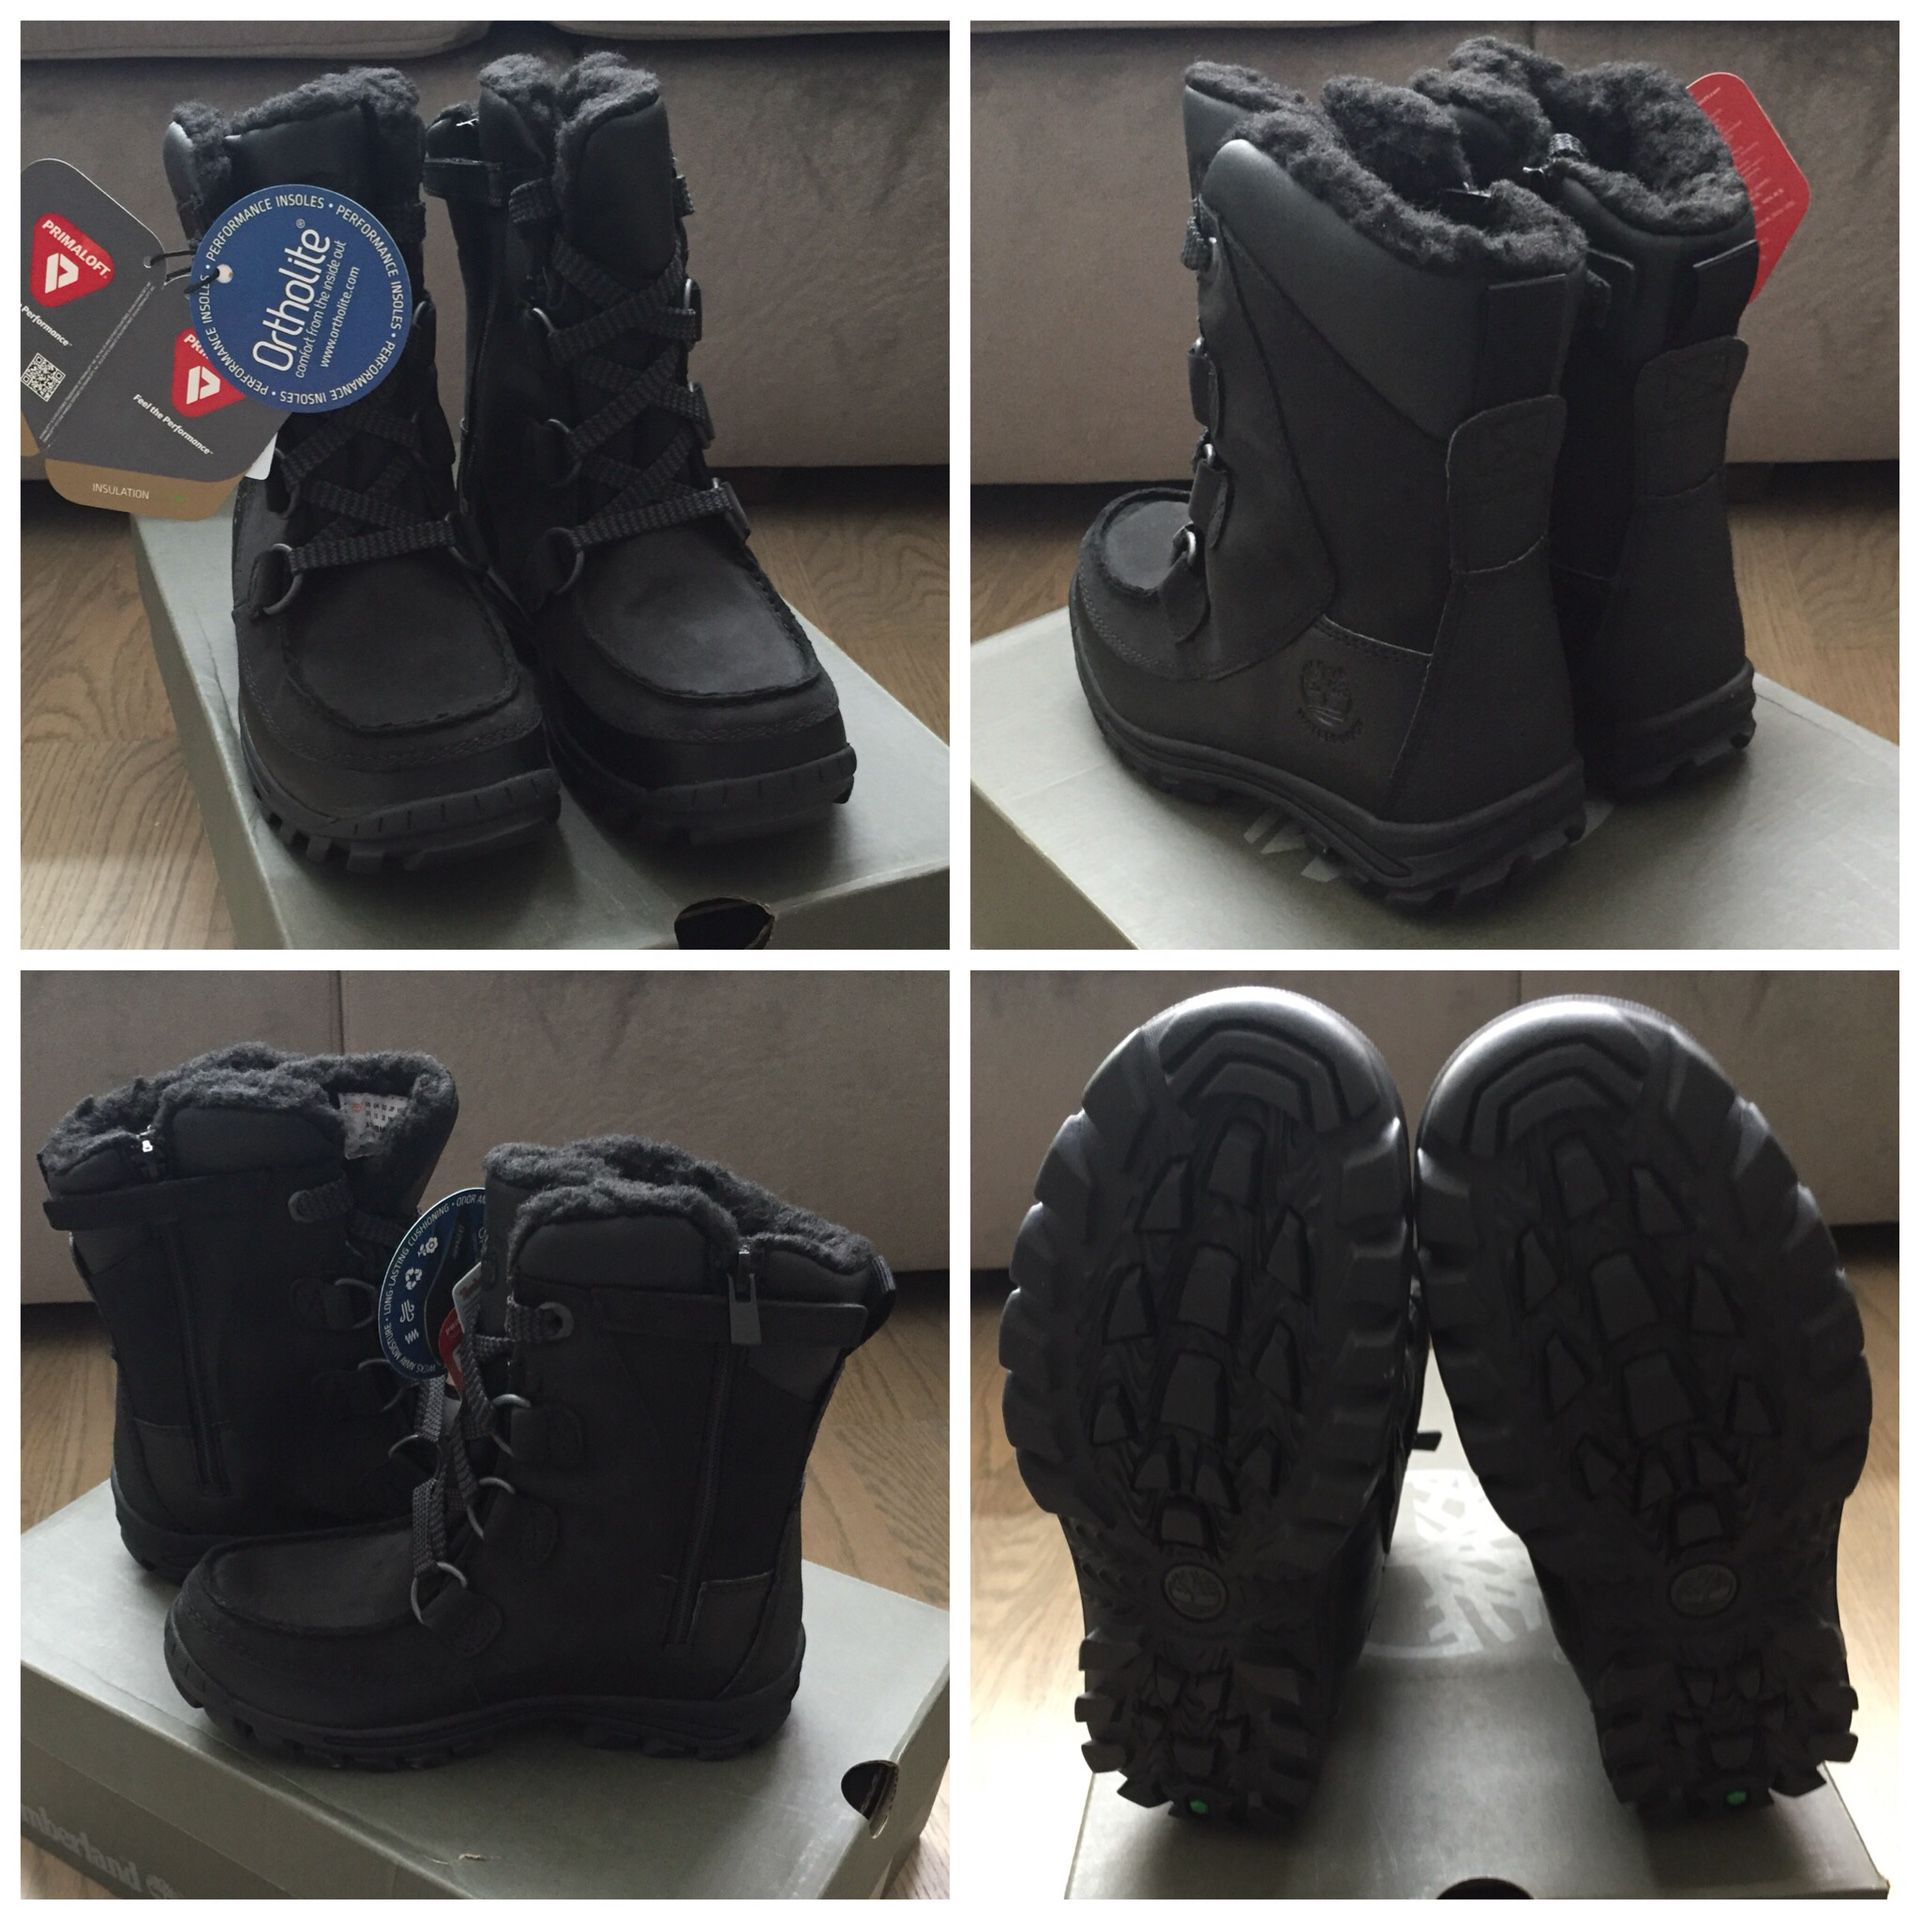 NIB Timberland Chillberg Black Boots Toddler $80 and Big Boy sizes $85